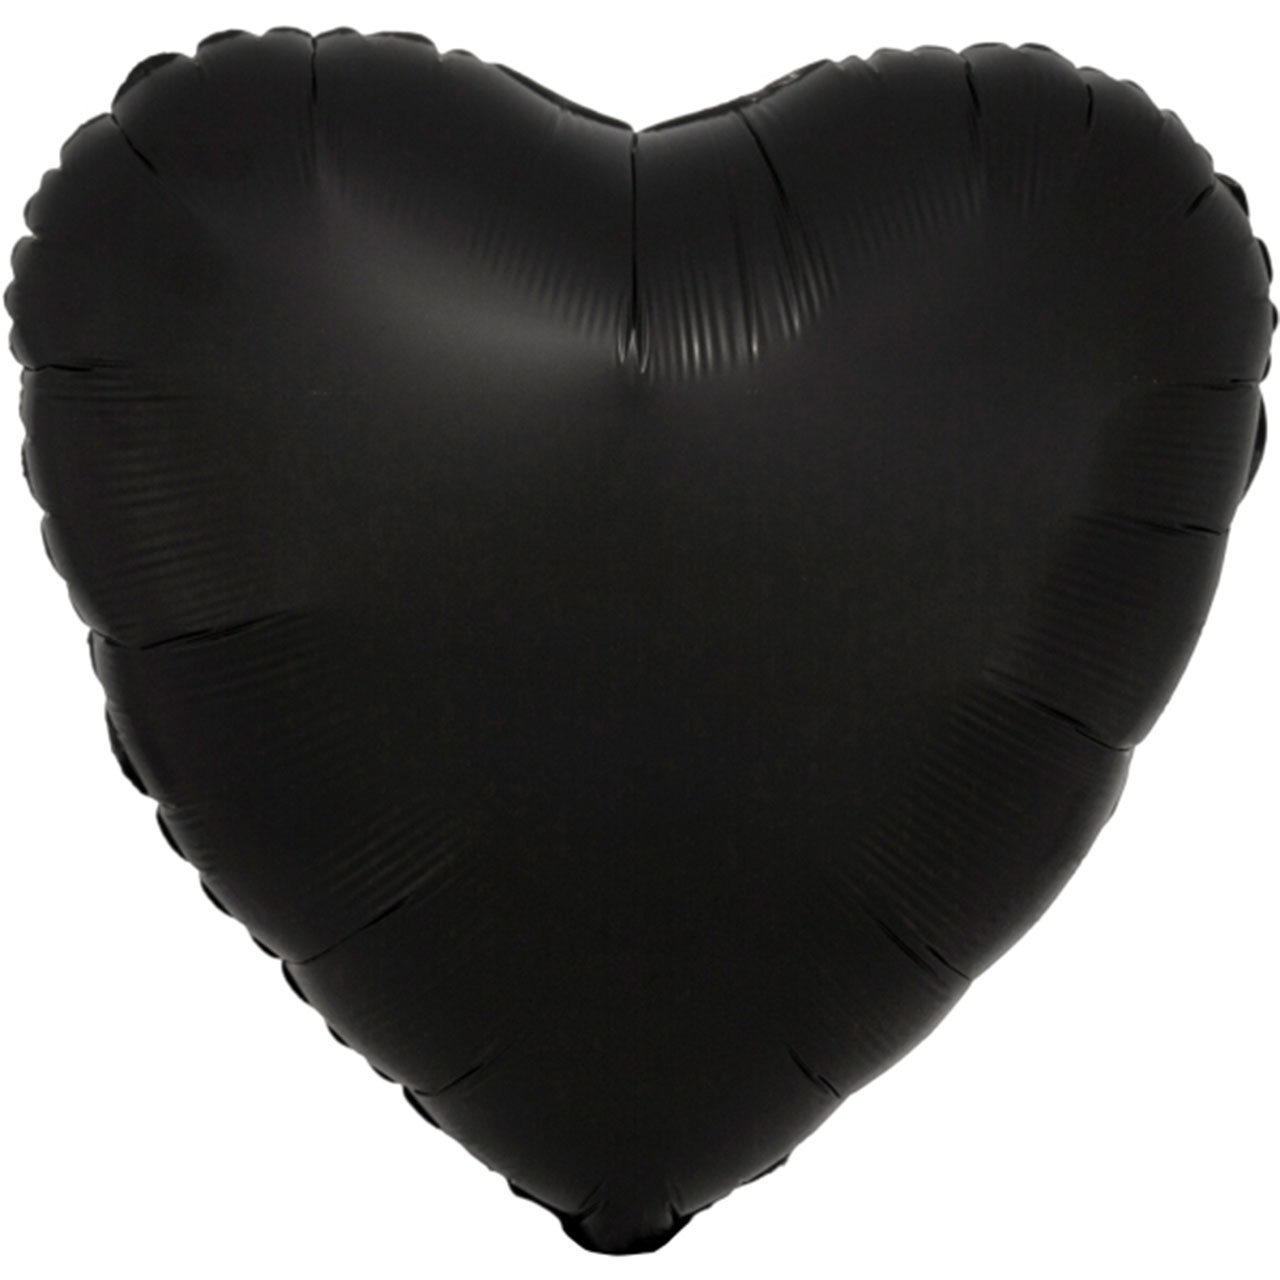  Foil Balloon - Black Heart Satin